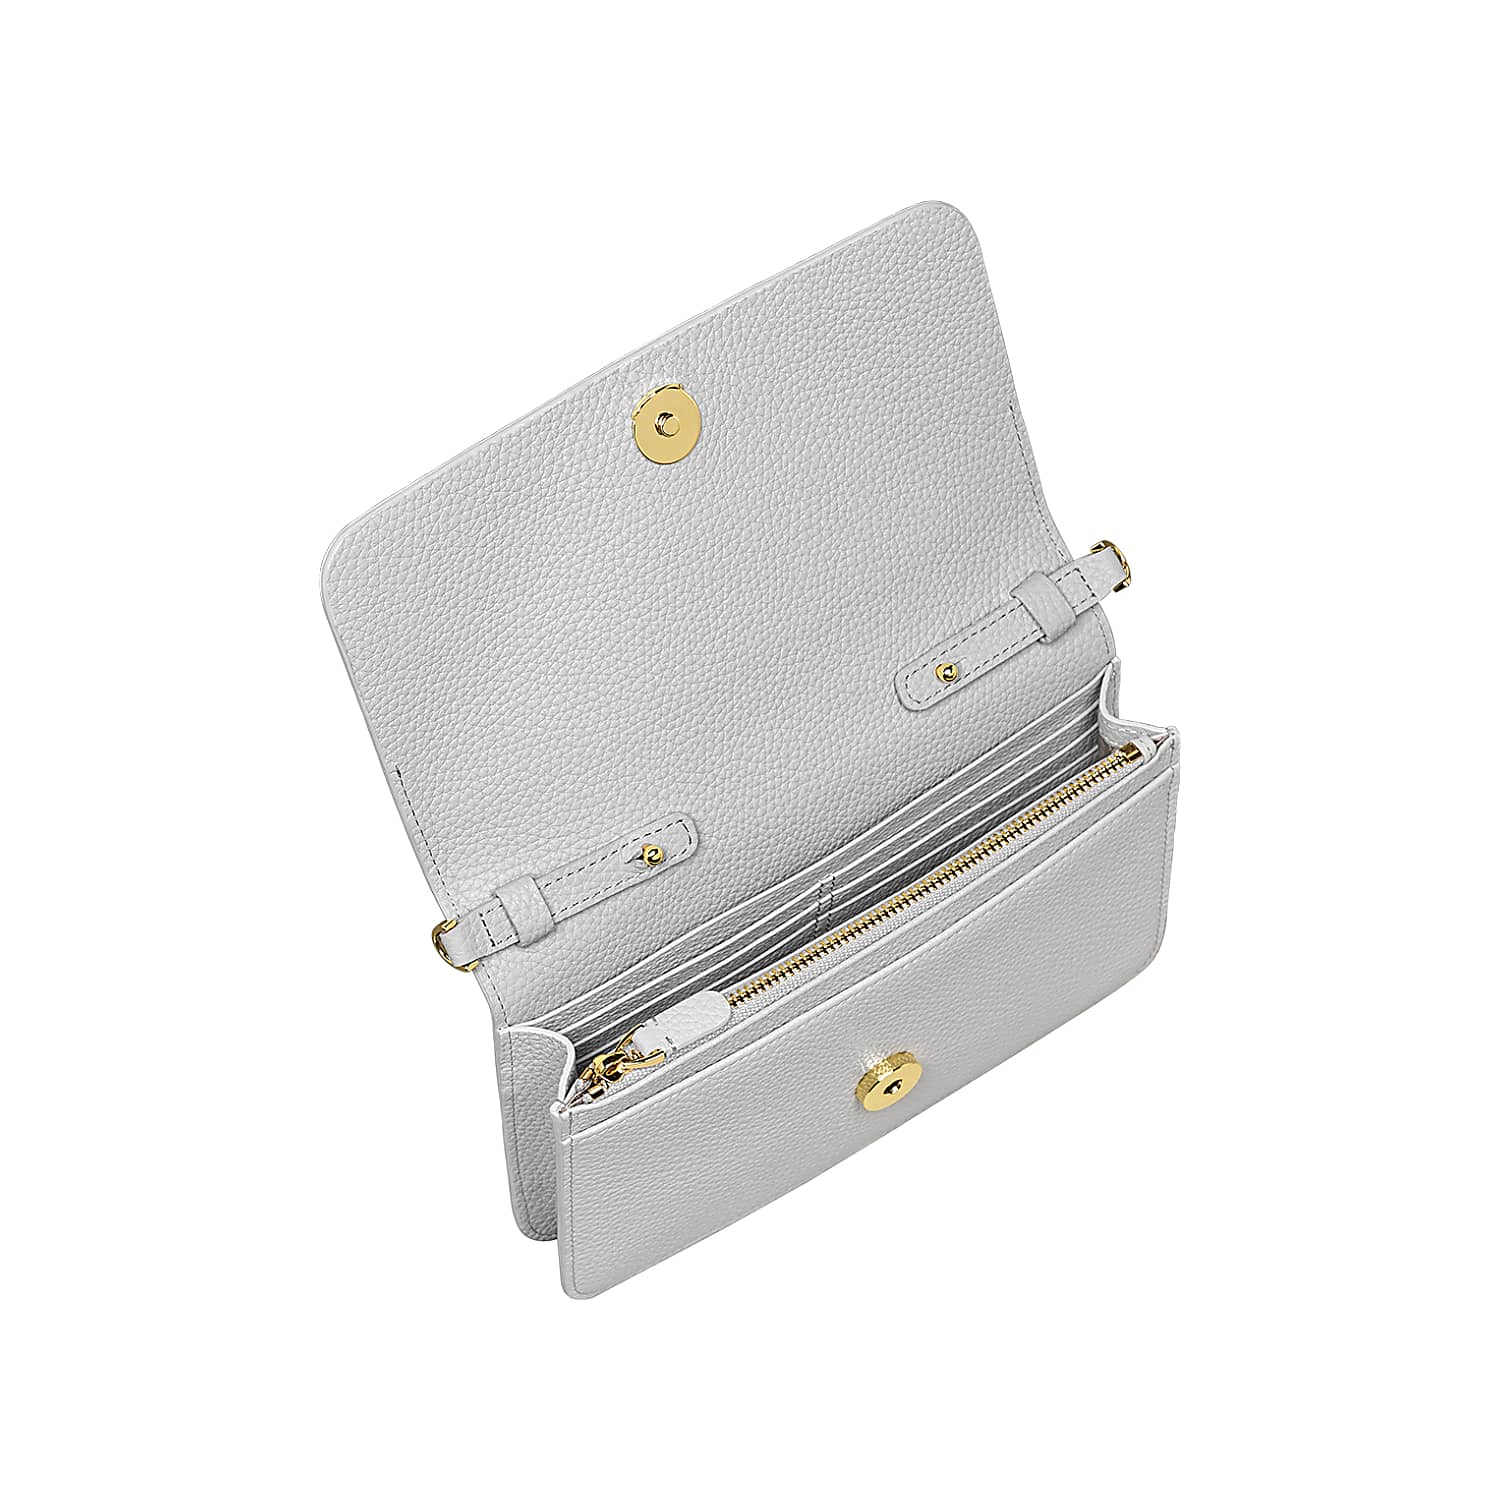 Fashion wallet with shoulder strap